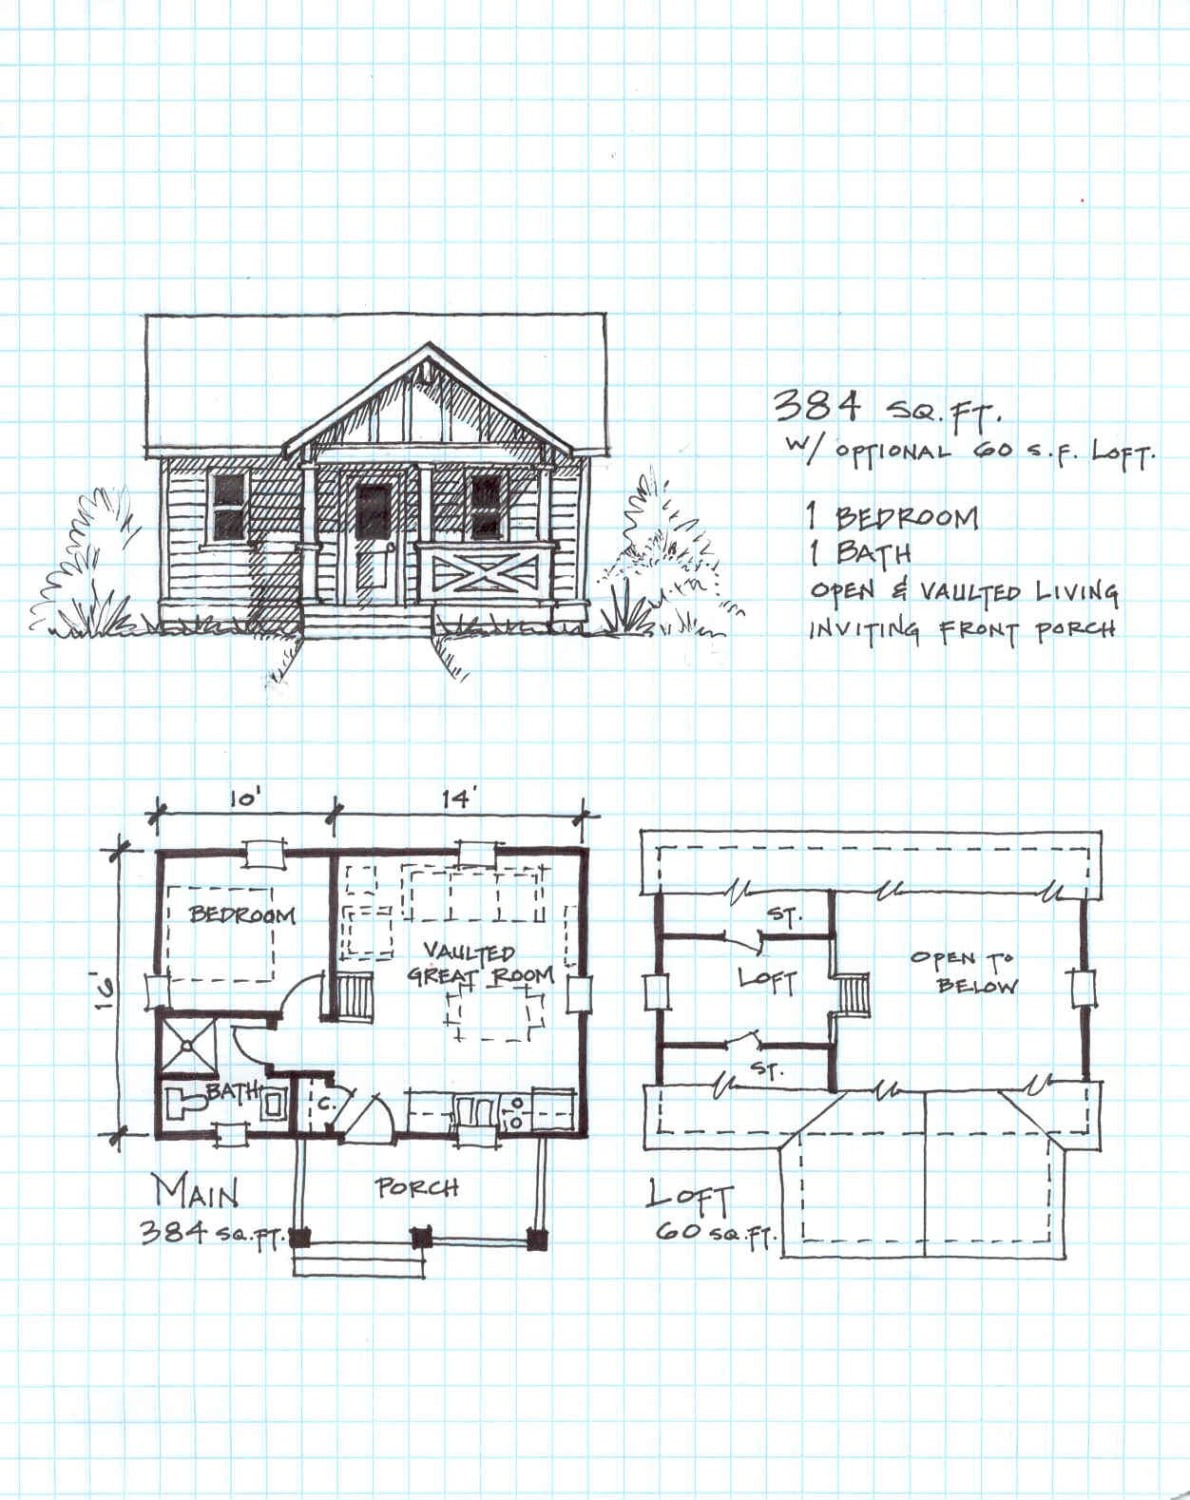 30+ Small Cabin Plans for the Homestead Prepper | The Survivalist Blog | Small cabin plans, Cabin house plans, Cabin floor plans